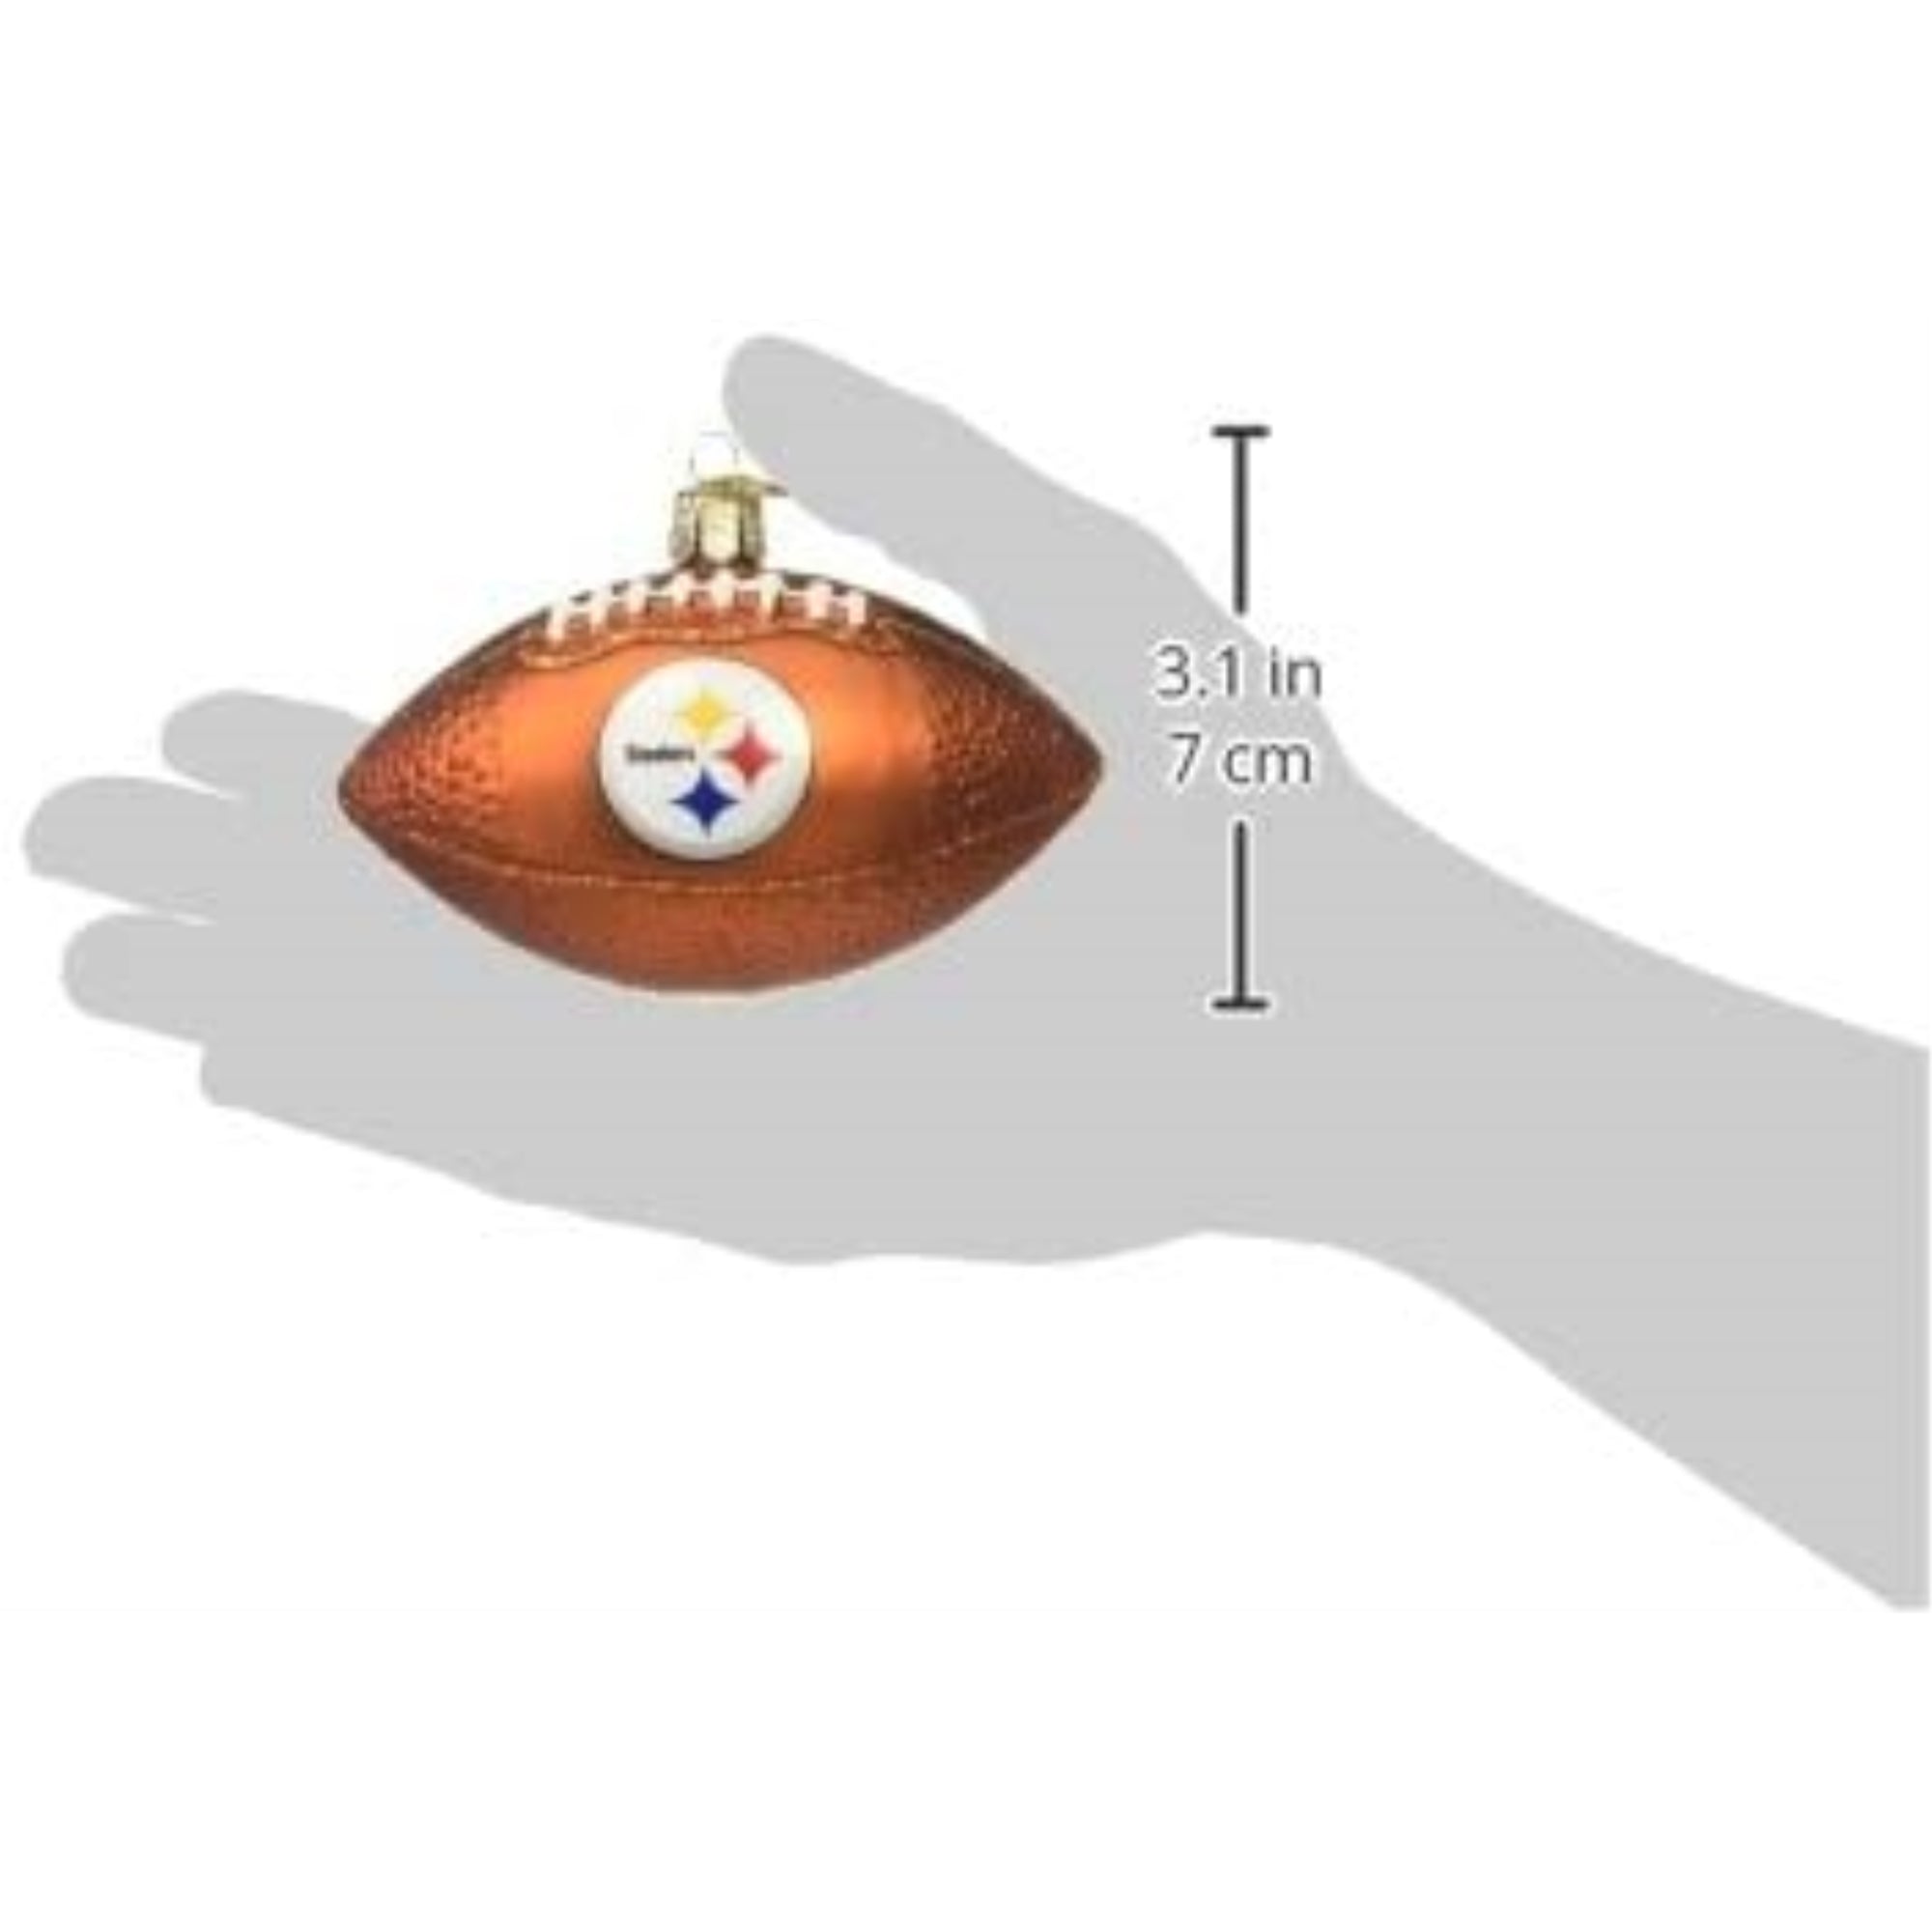 Old World Christmas Blown Glass Christmas Ornament, Pittsburgh Steelers Football